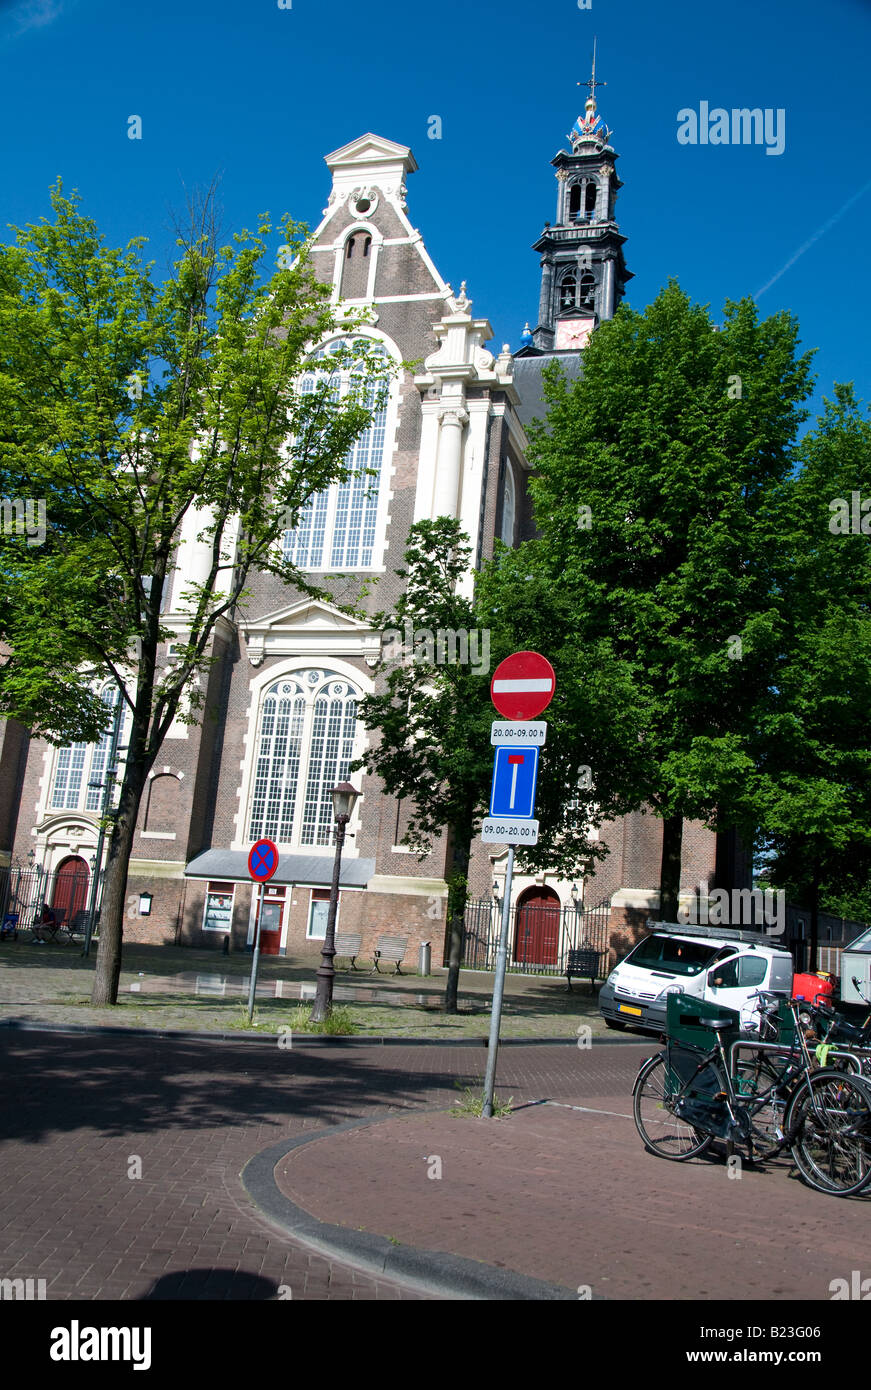 westerkerk wester church in westermarket plaza by anne frank house amsterdam holland netherlands Stock Photo